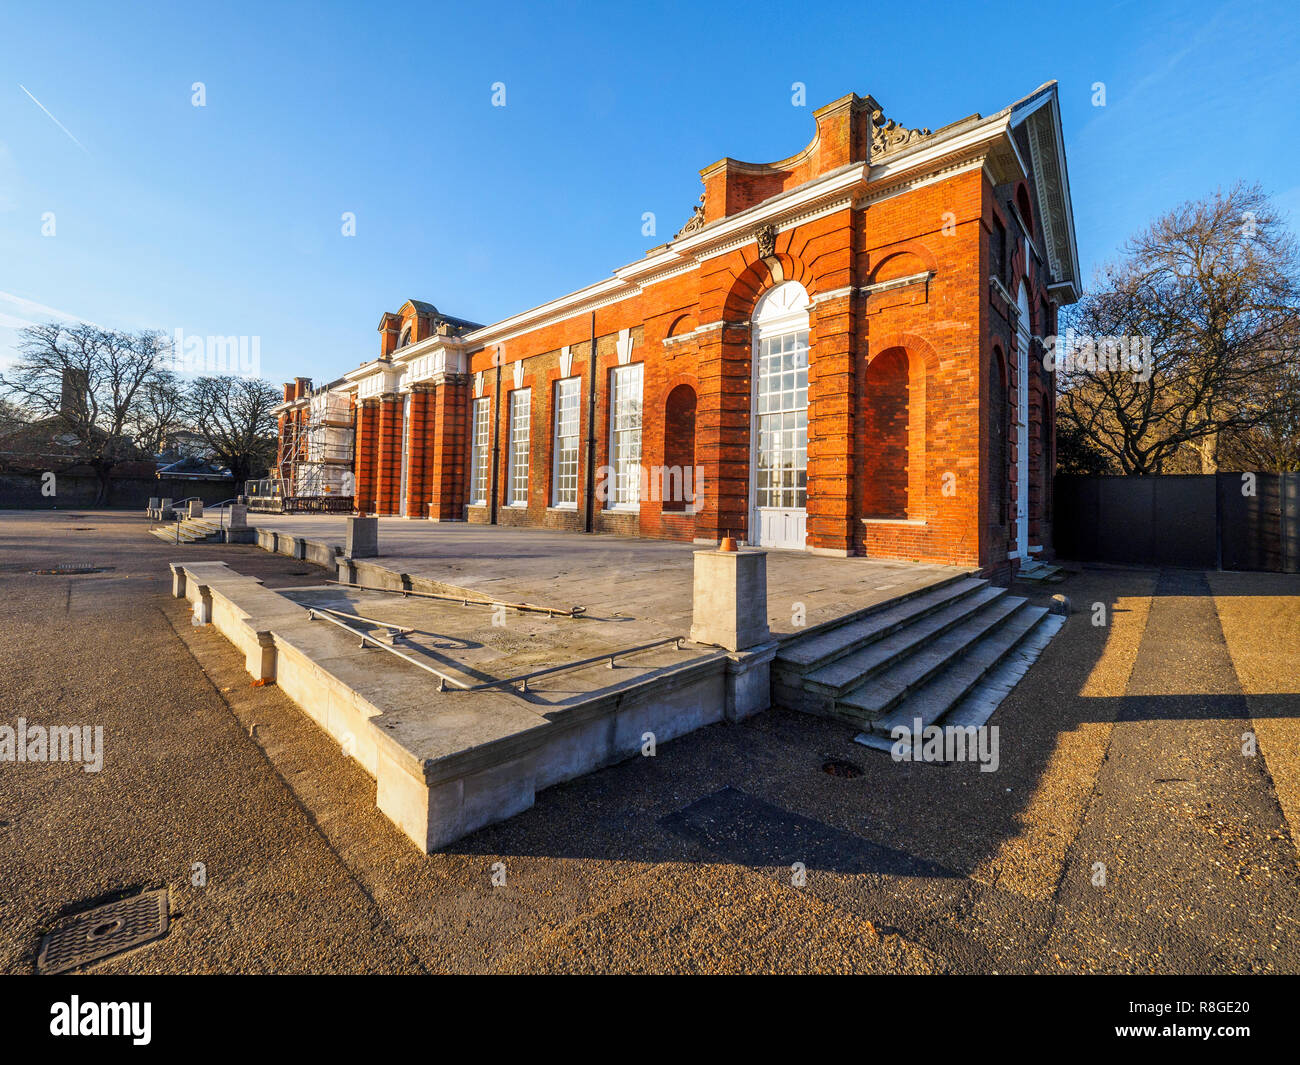 The Orangery Restaurant In Kensington Palace Gardens - London, England Stock Photo